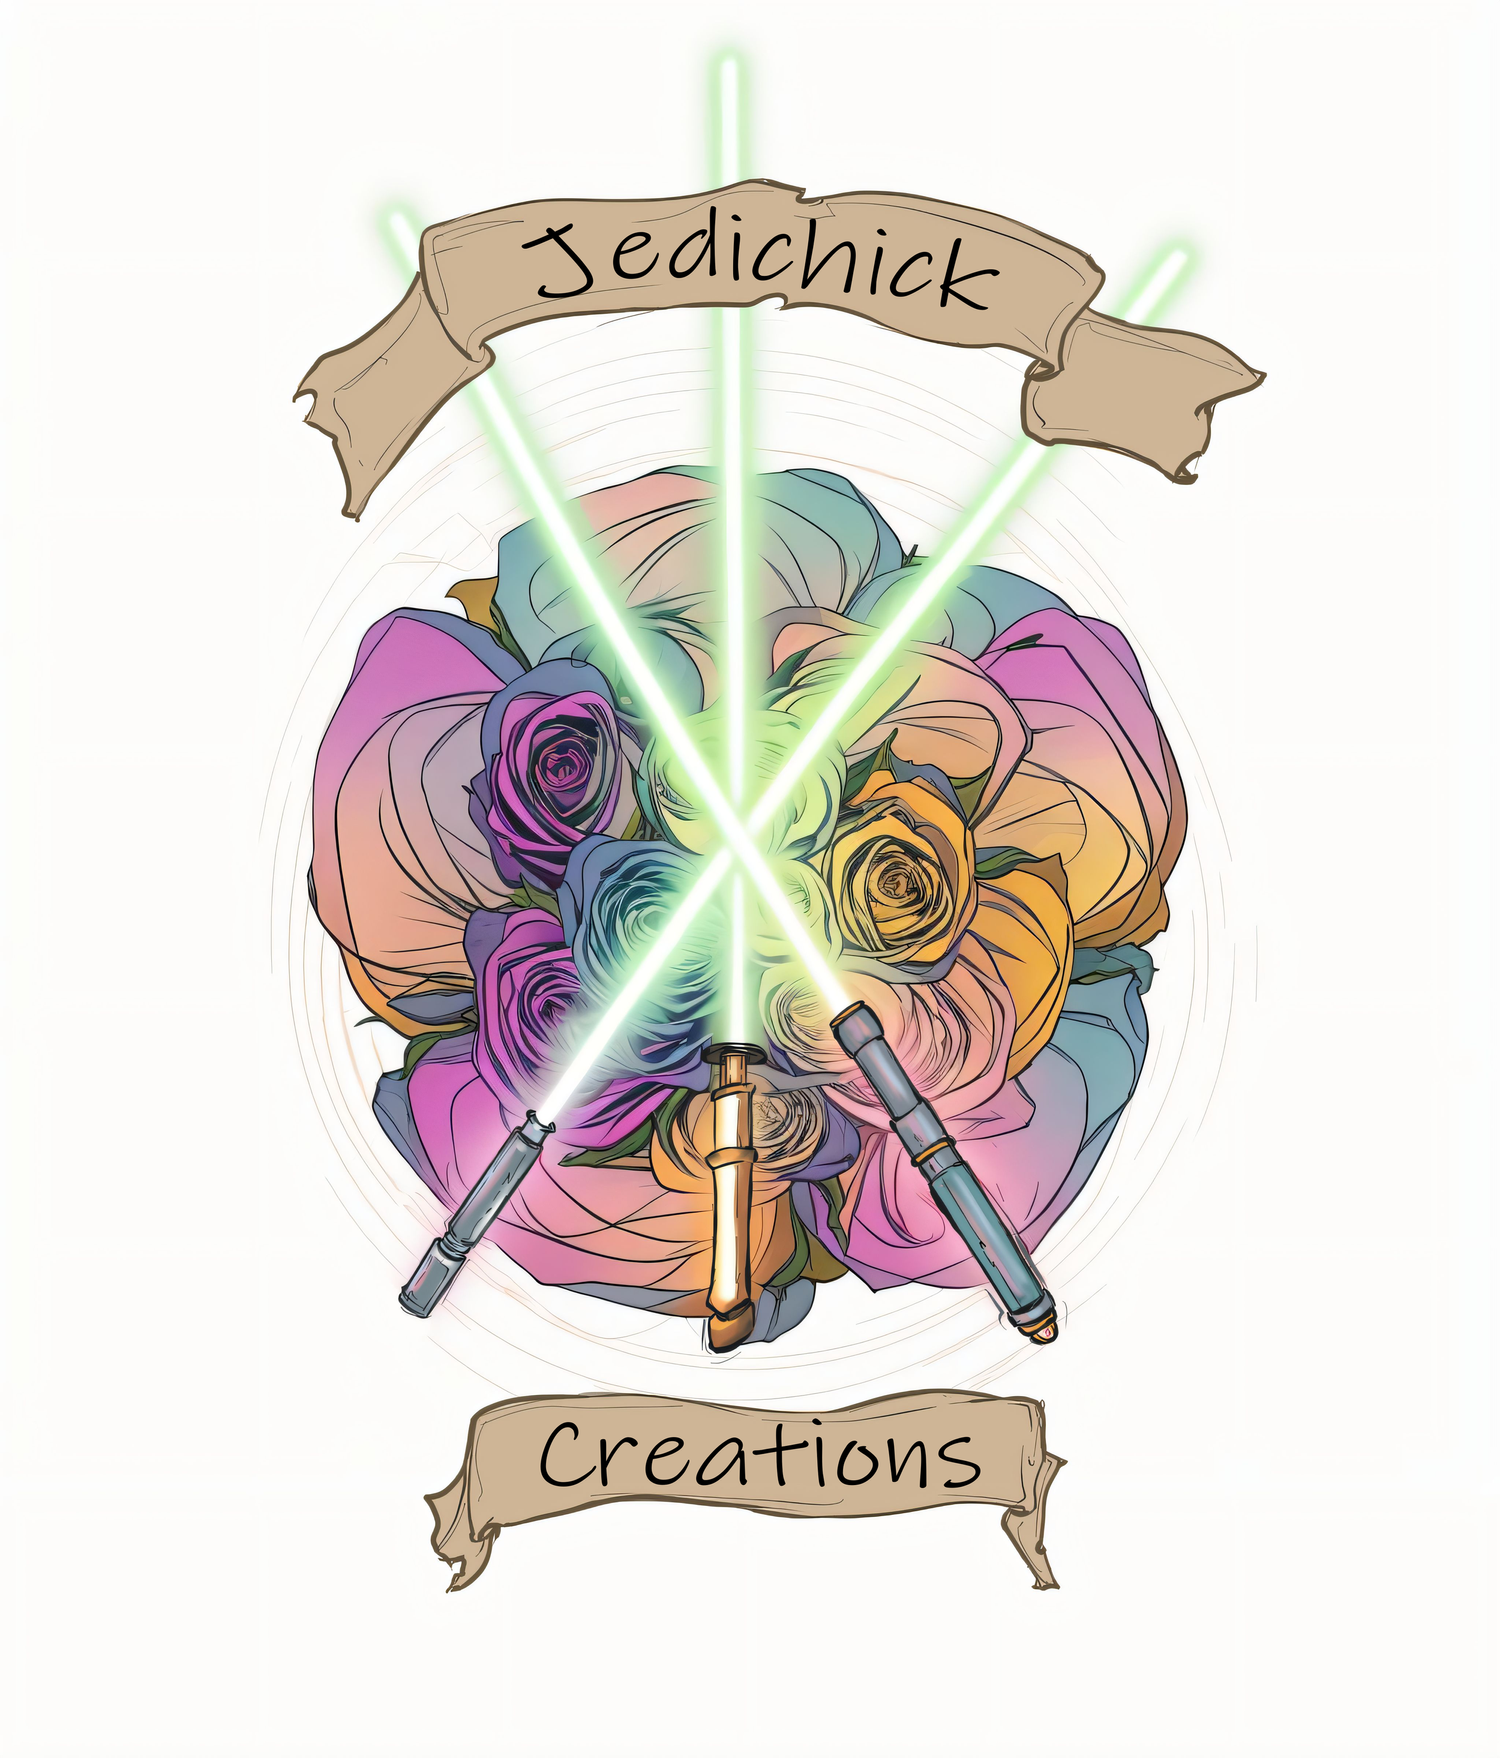 Jedichick Creations